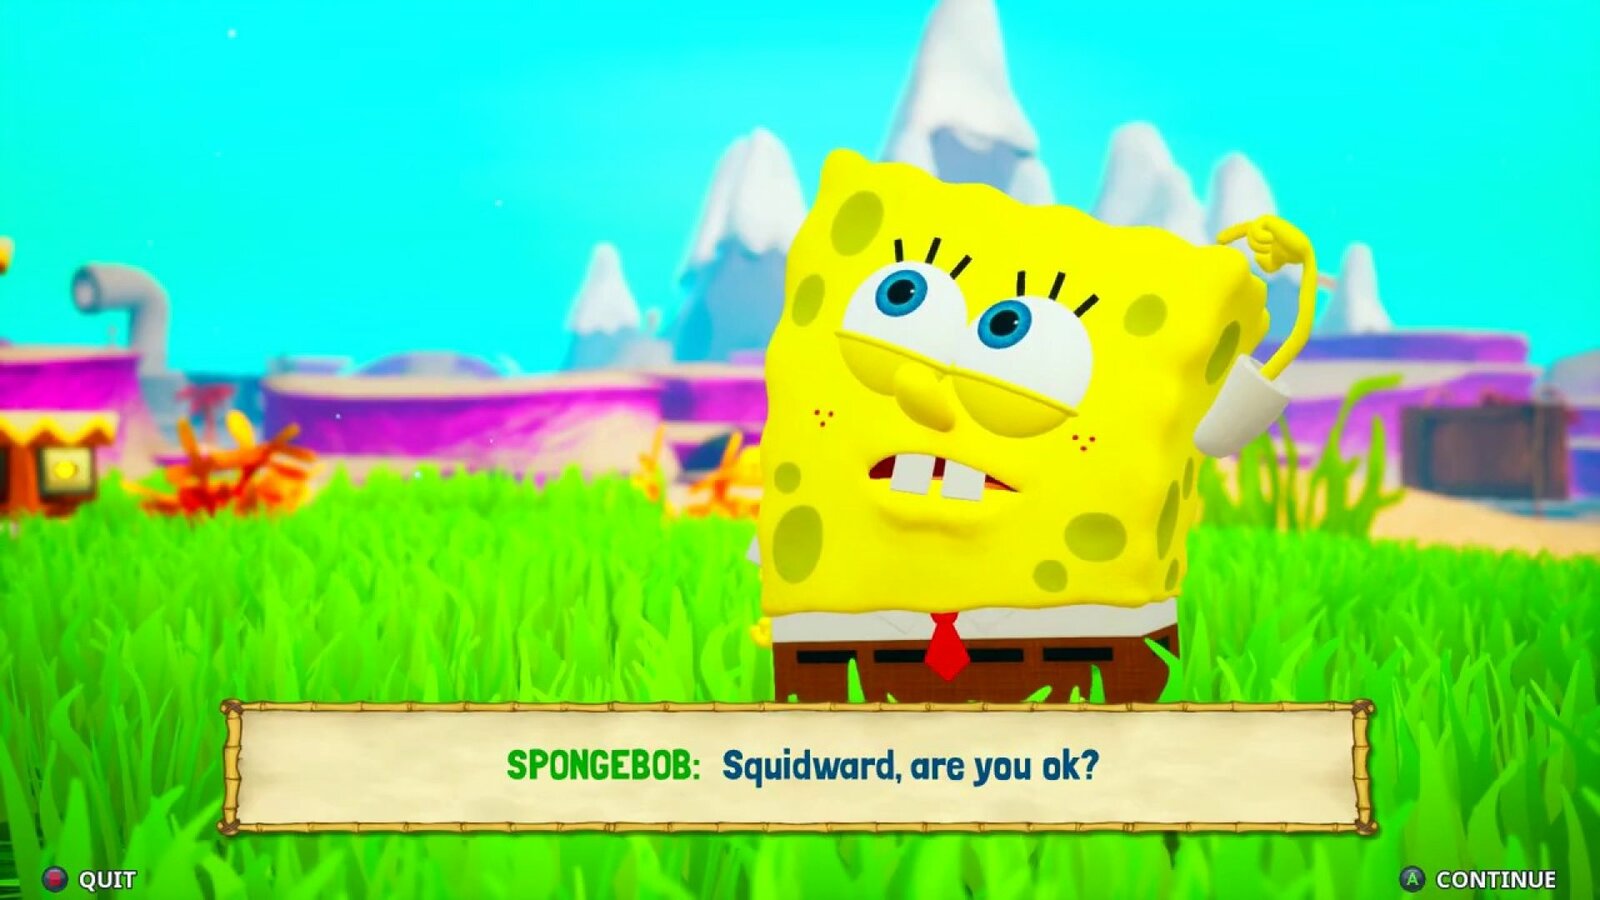 SpongeBob SquarePants: Battle For Bikini Bottom – Rehydrated. Shiny Edition